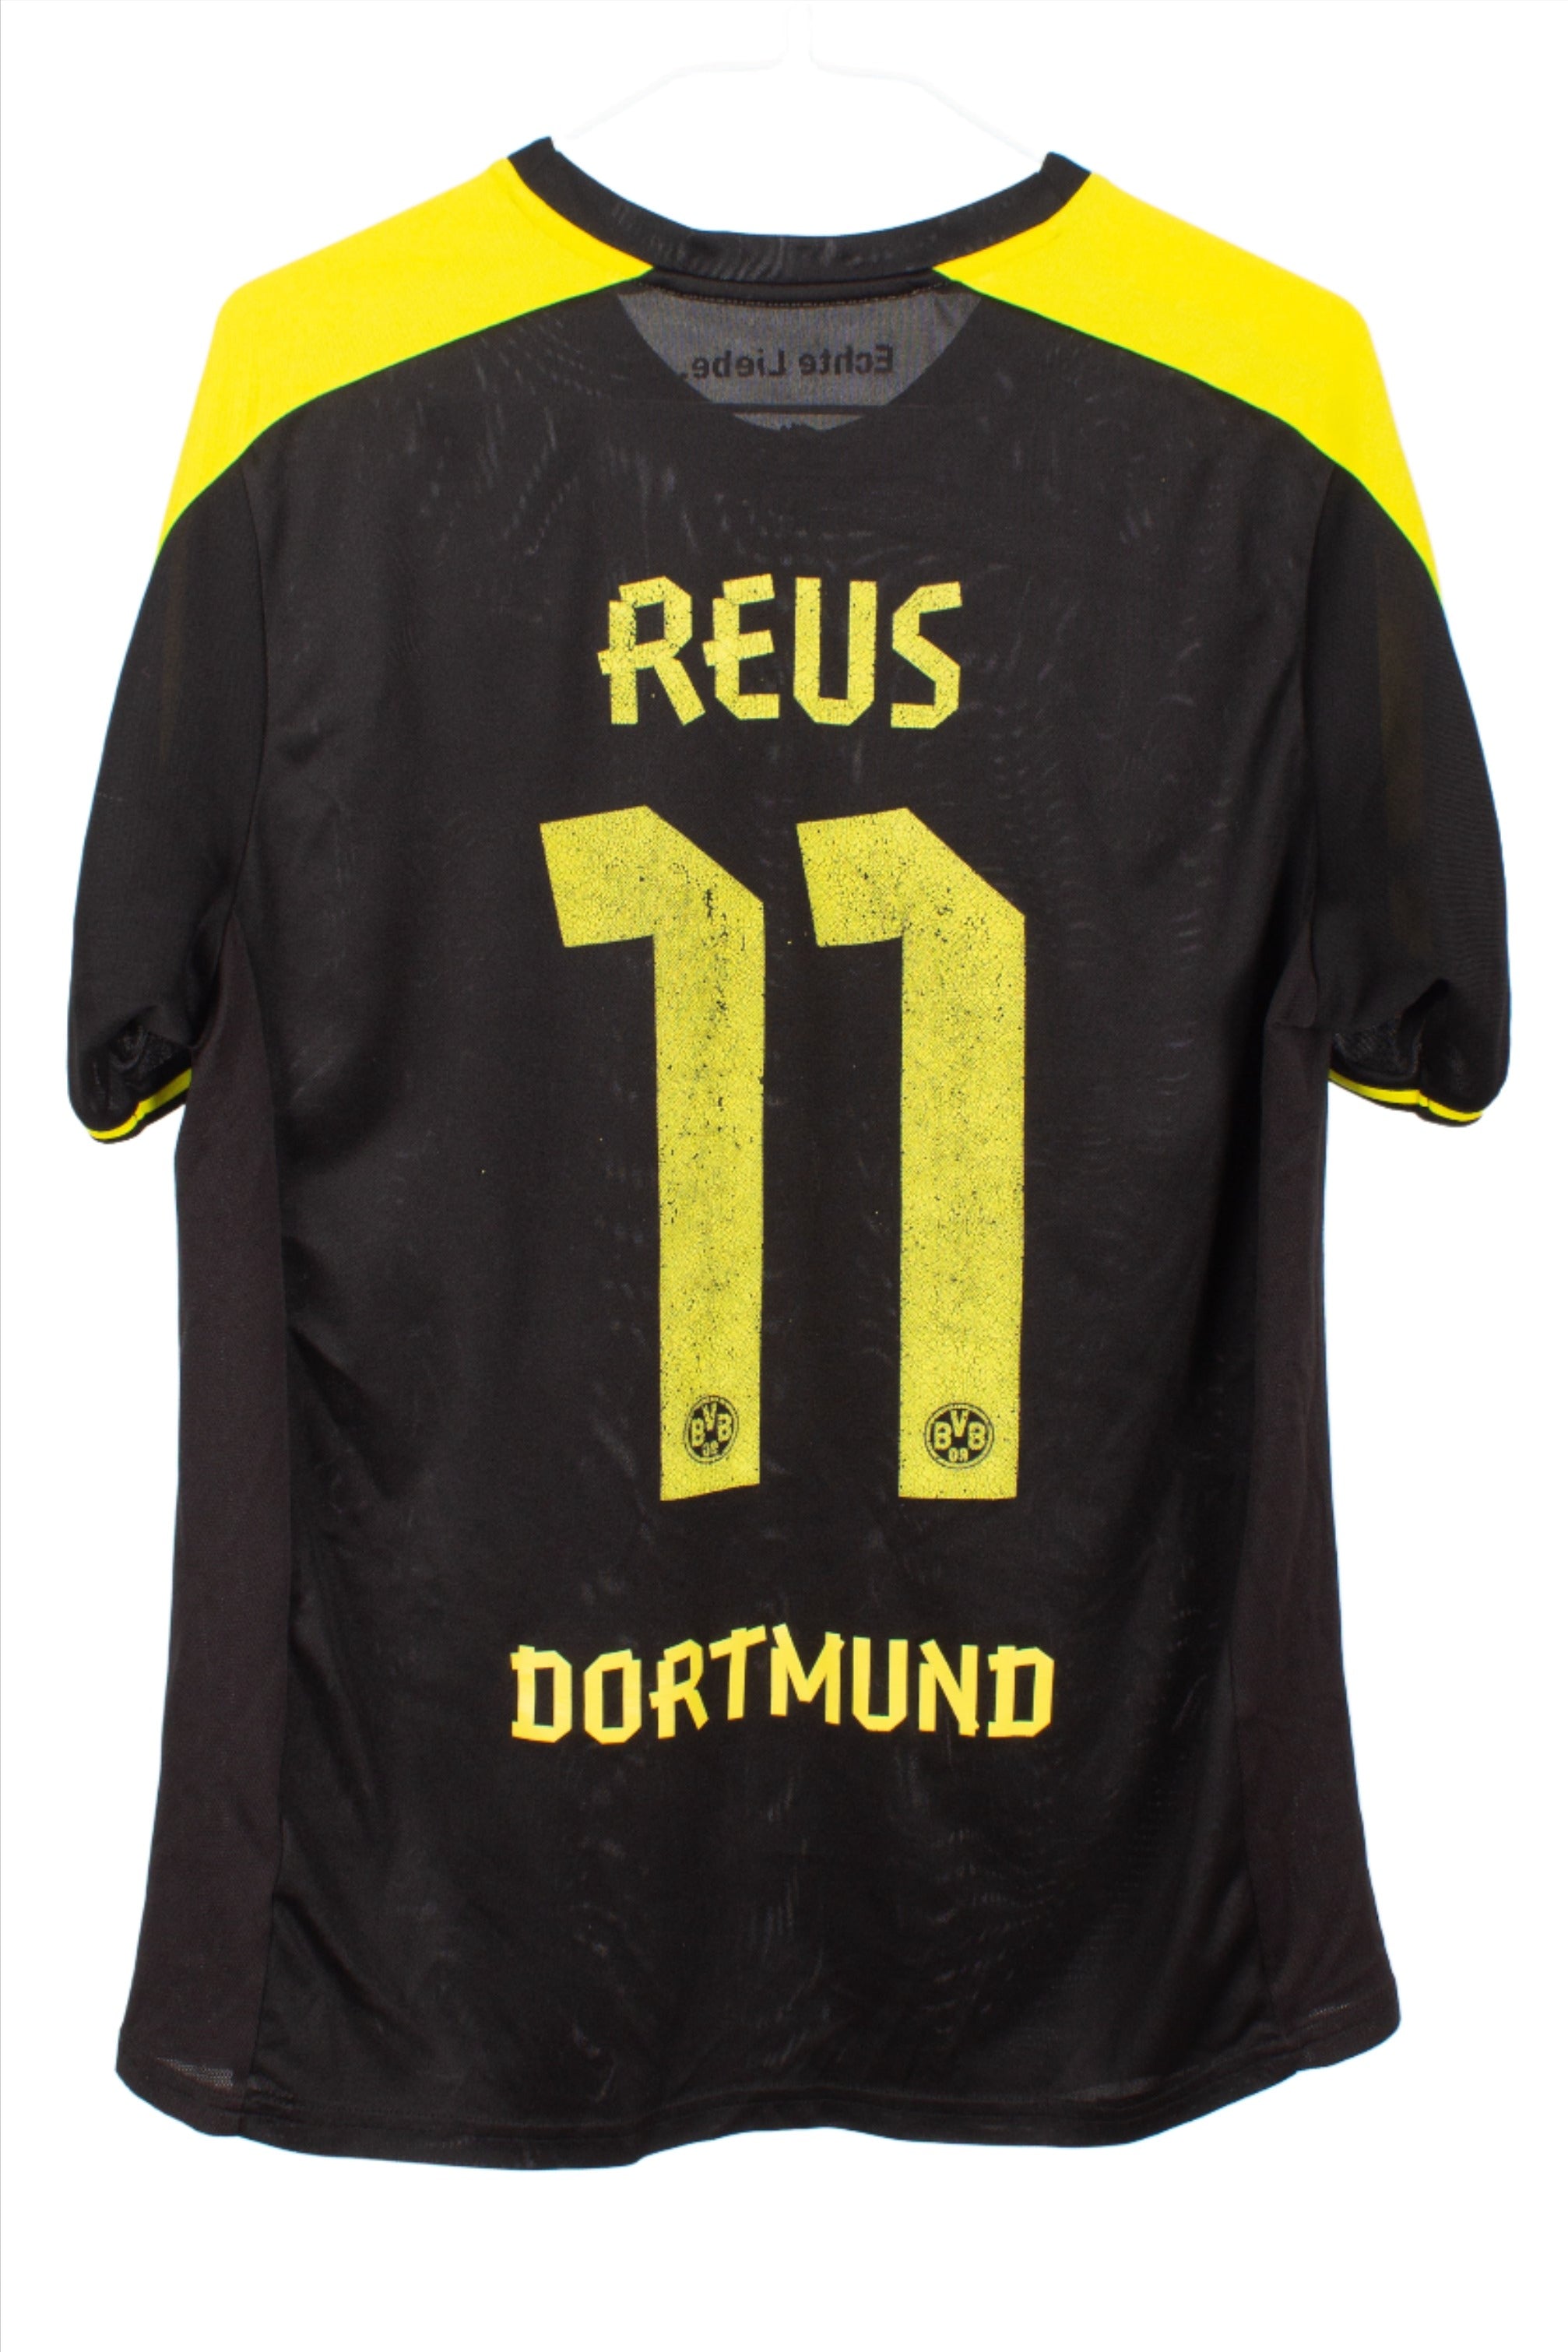 Borussia Dortmund 2013/14 Away Shirt (Reus #11) (S)